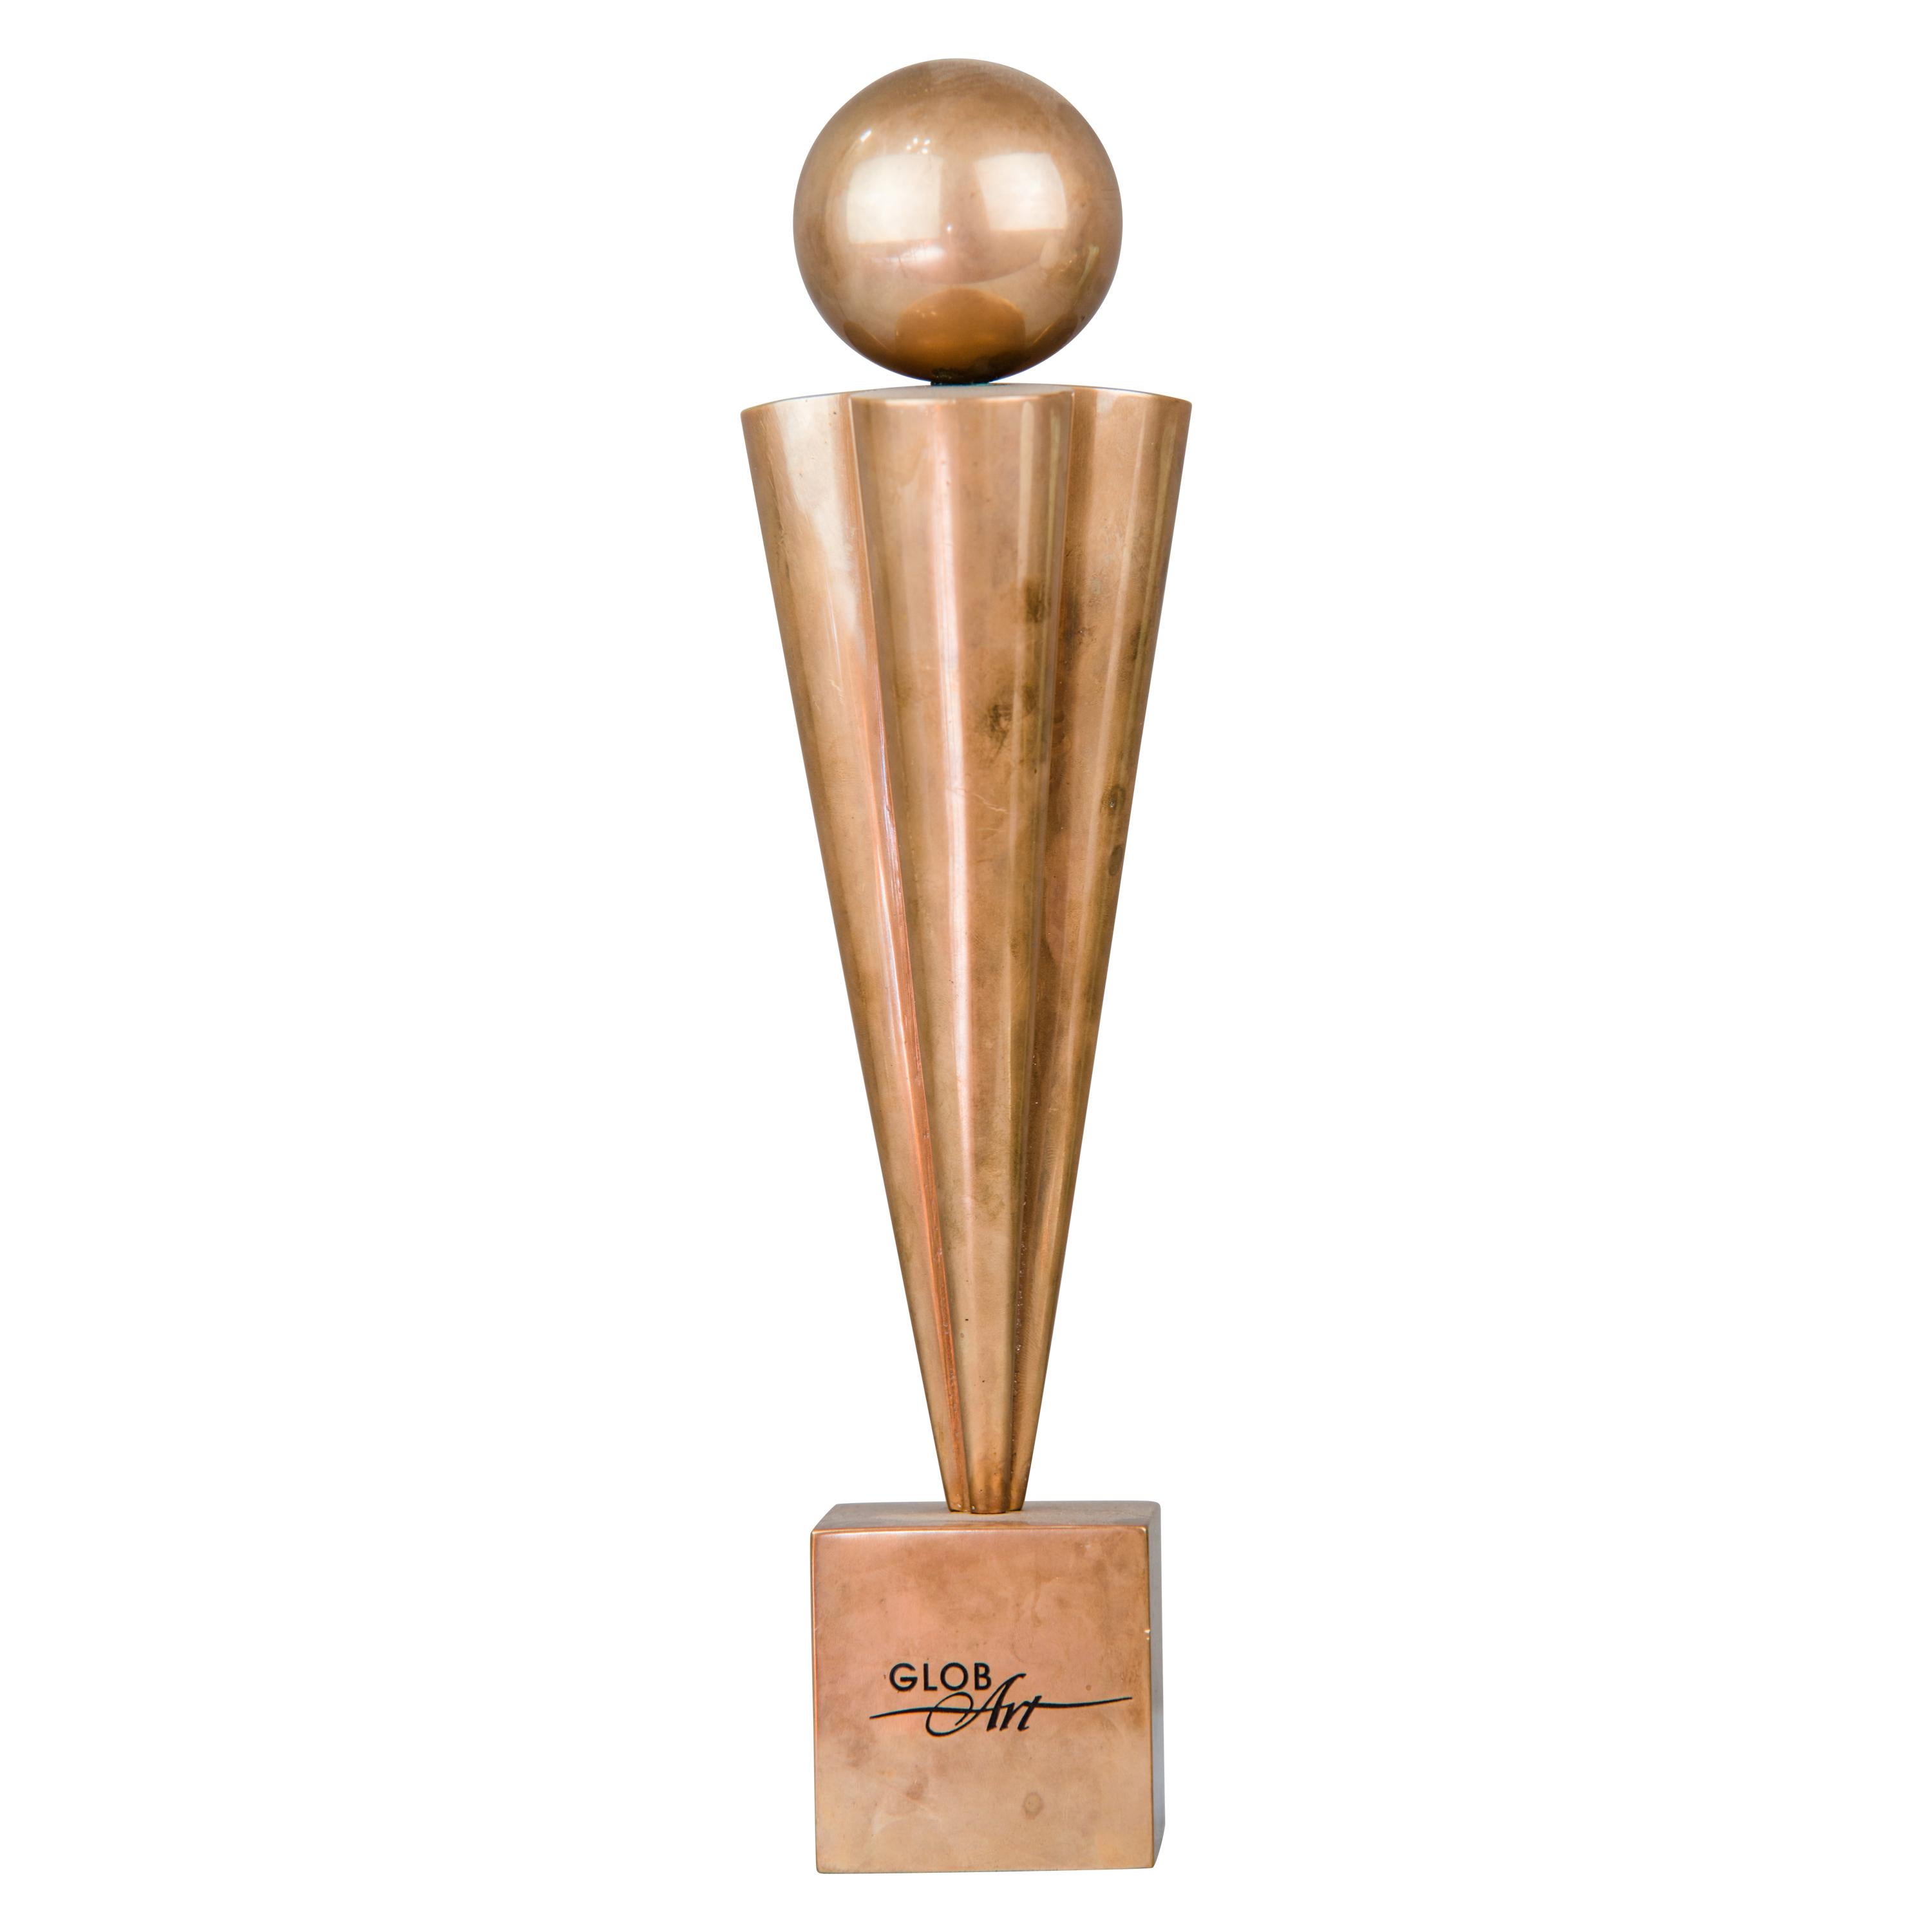 Original Globart Trophy, circa 1998 For Sale